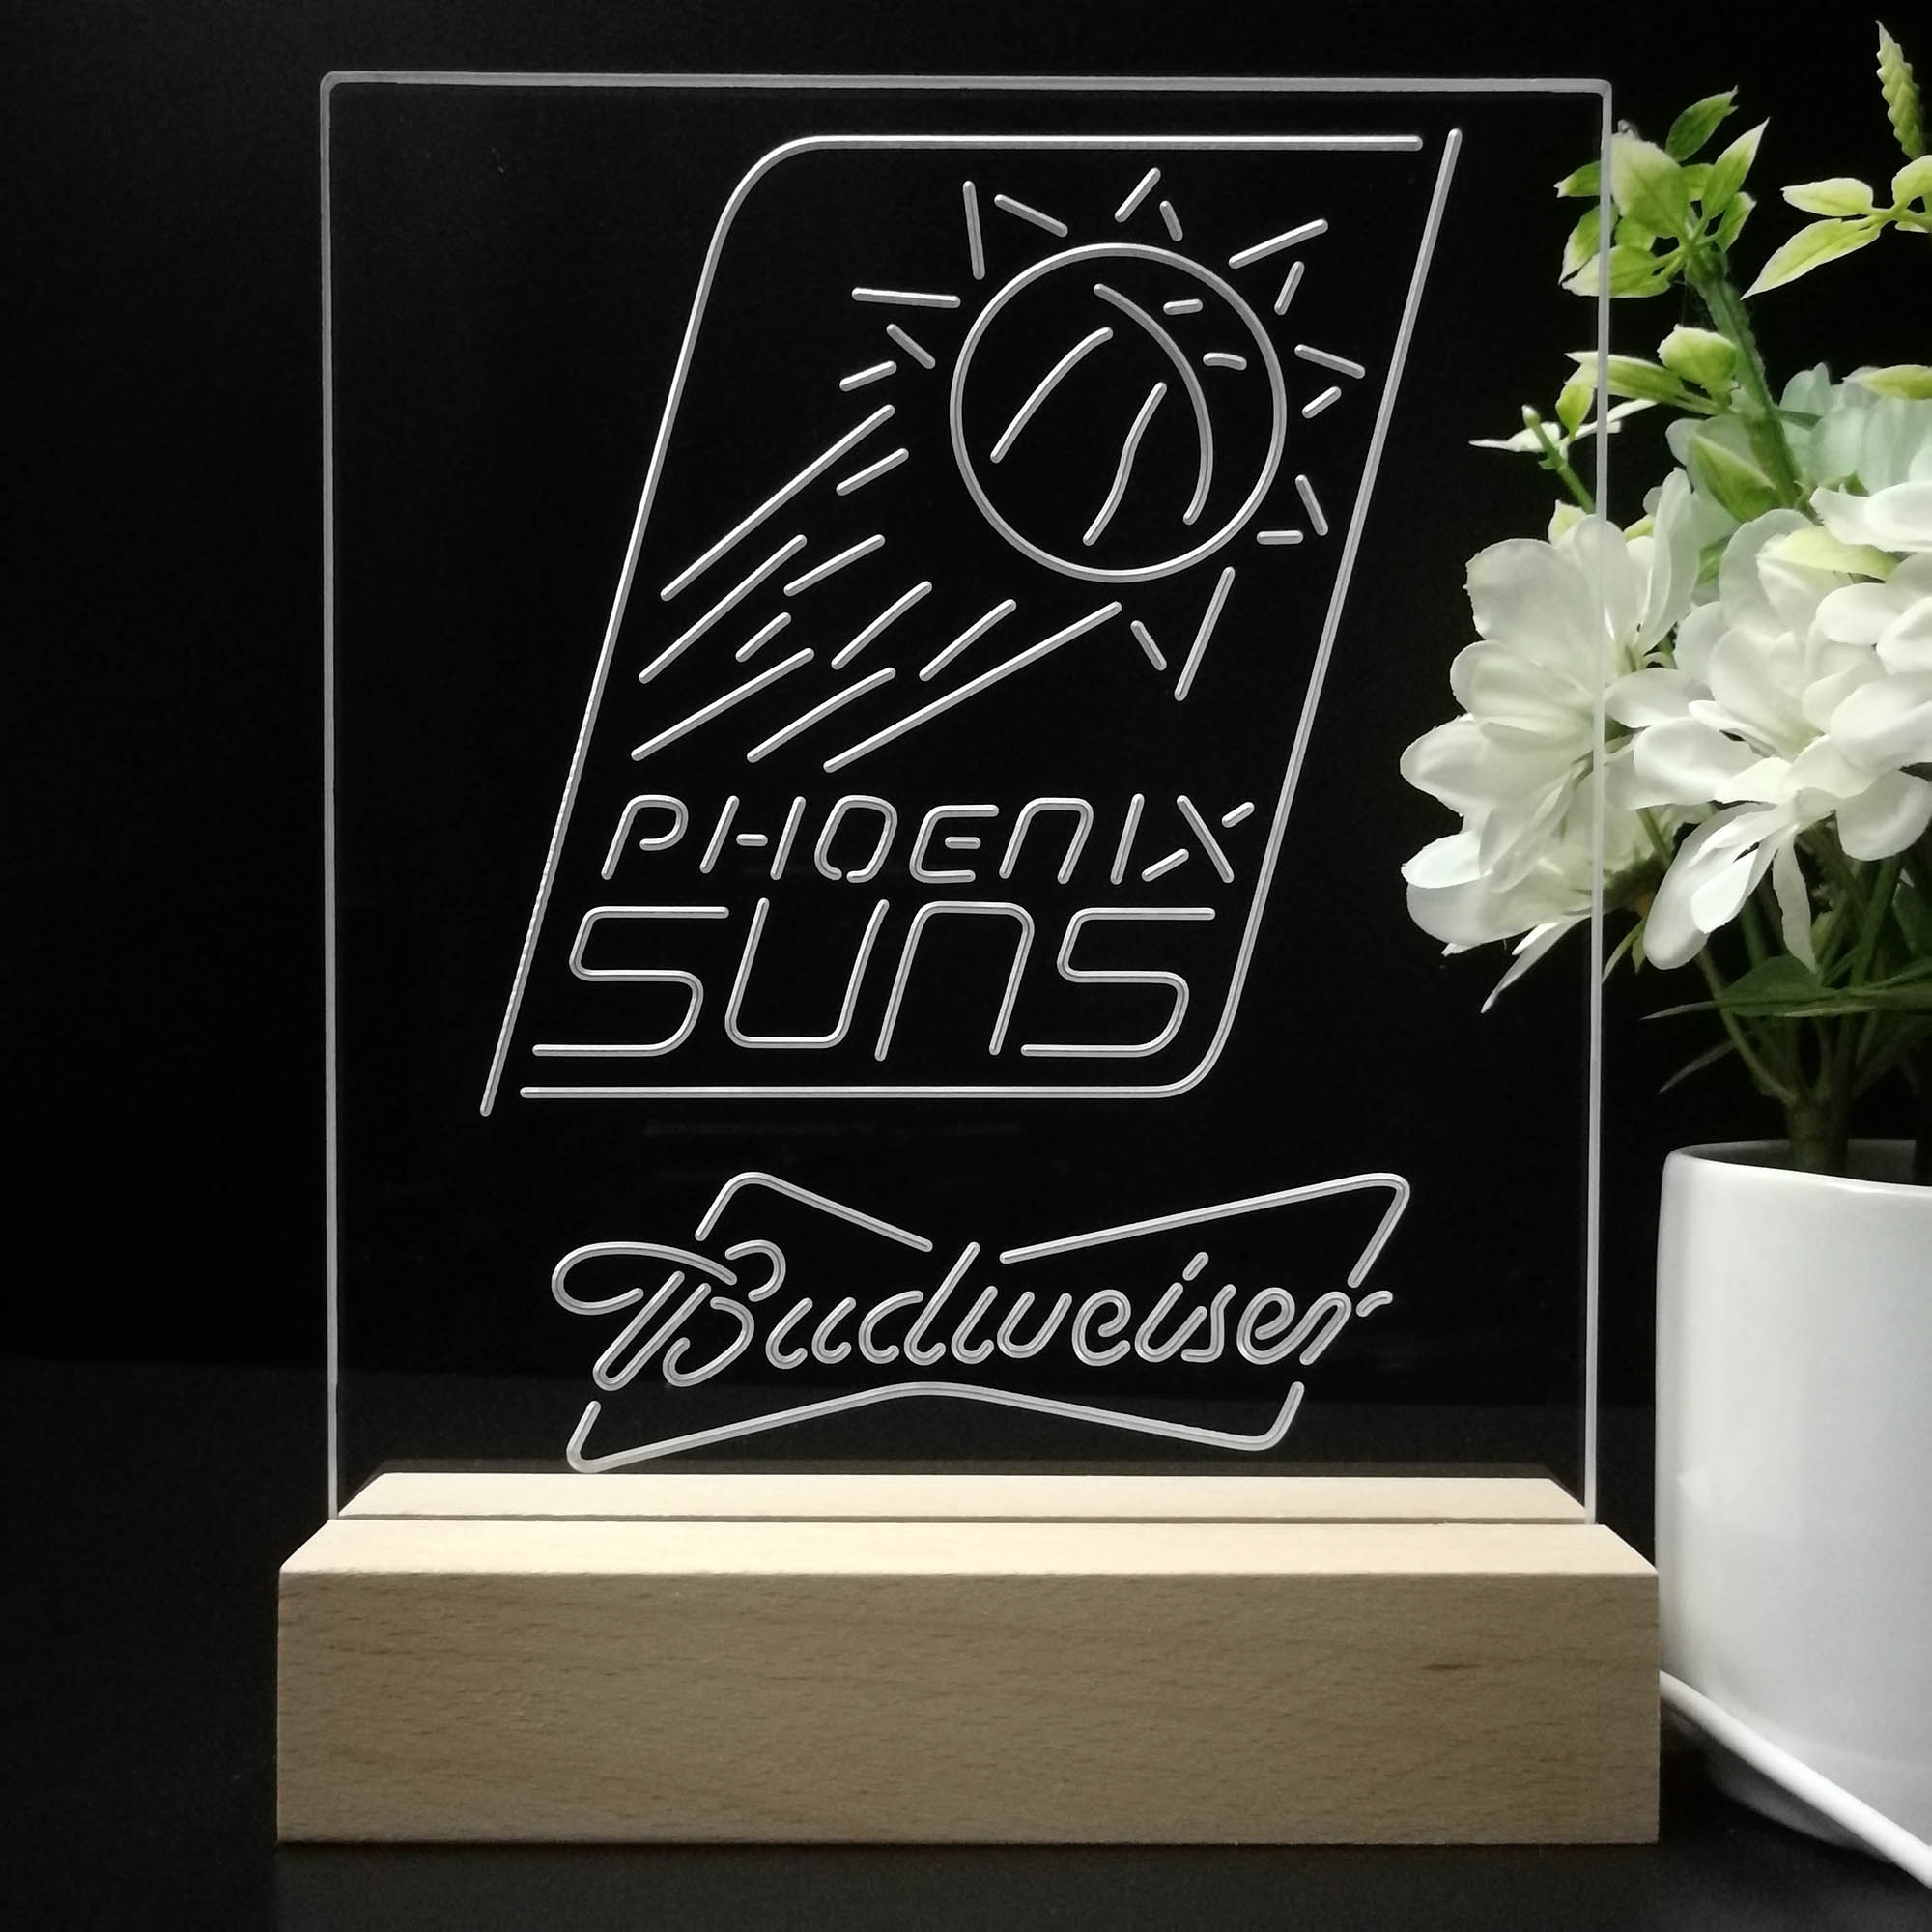 Phoenix Suns Budweiser Neon Sign Pub Bar Lamp